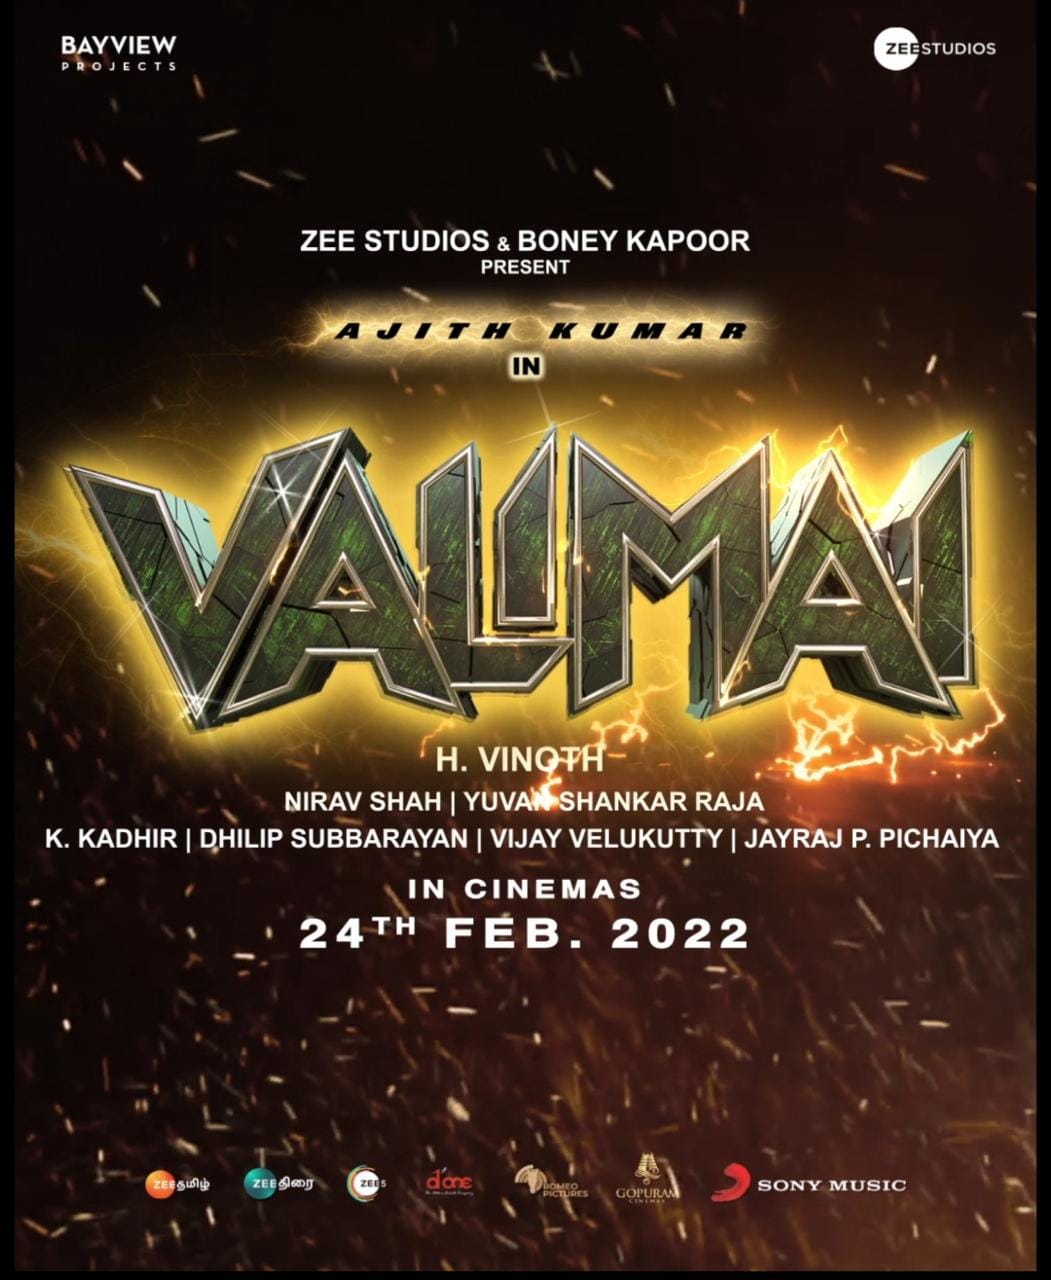 Valimai AjithKumar Movie Wrecking Ball Fight Scene Promo Glimpse Released